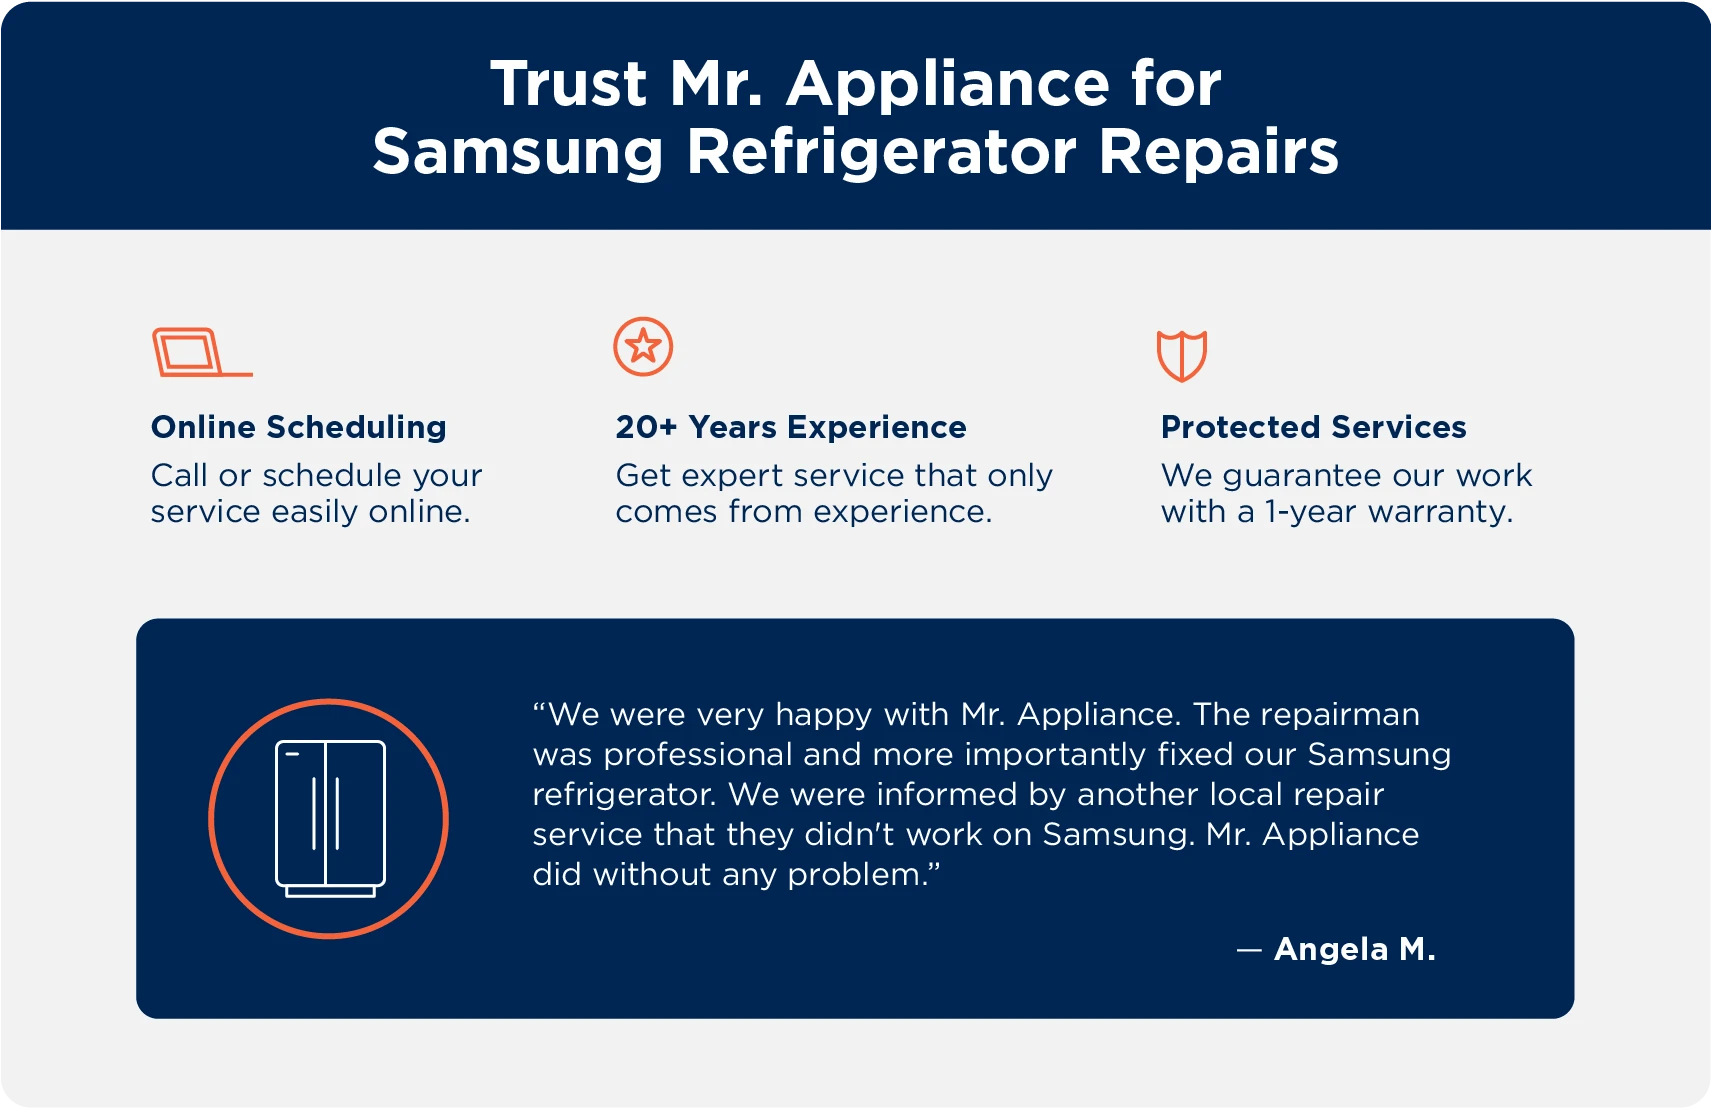 Testimonials for Mr. Appliance Samsung refrigerator repairs.